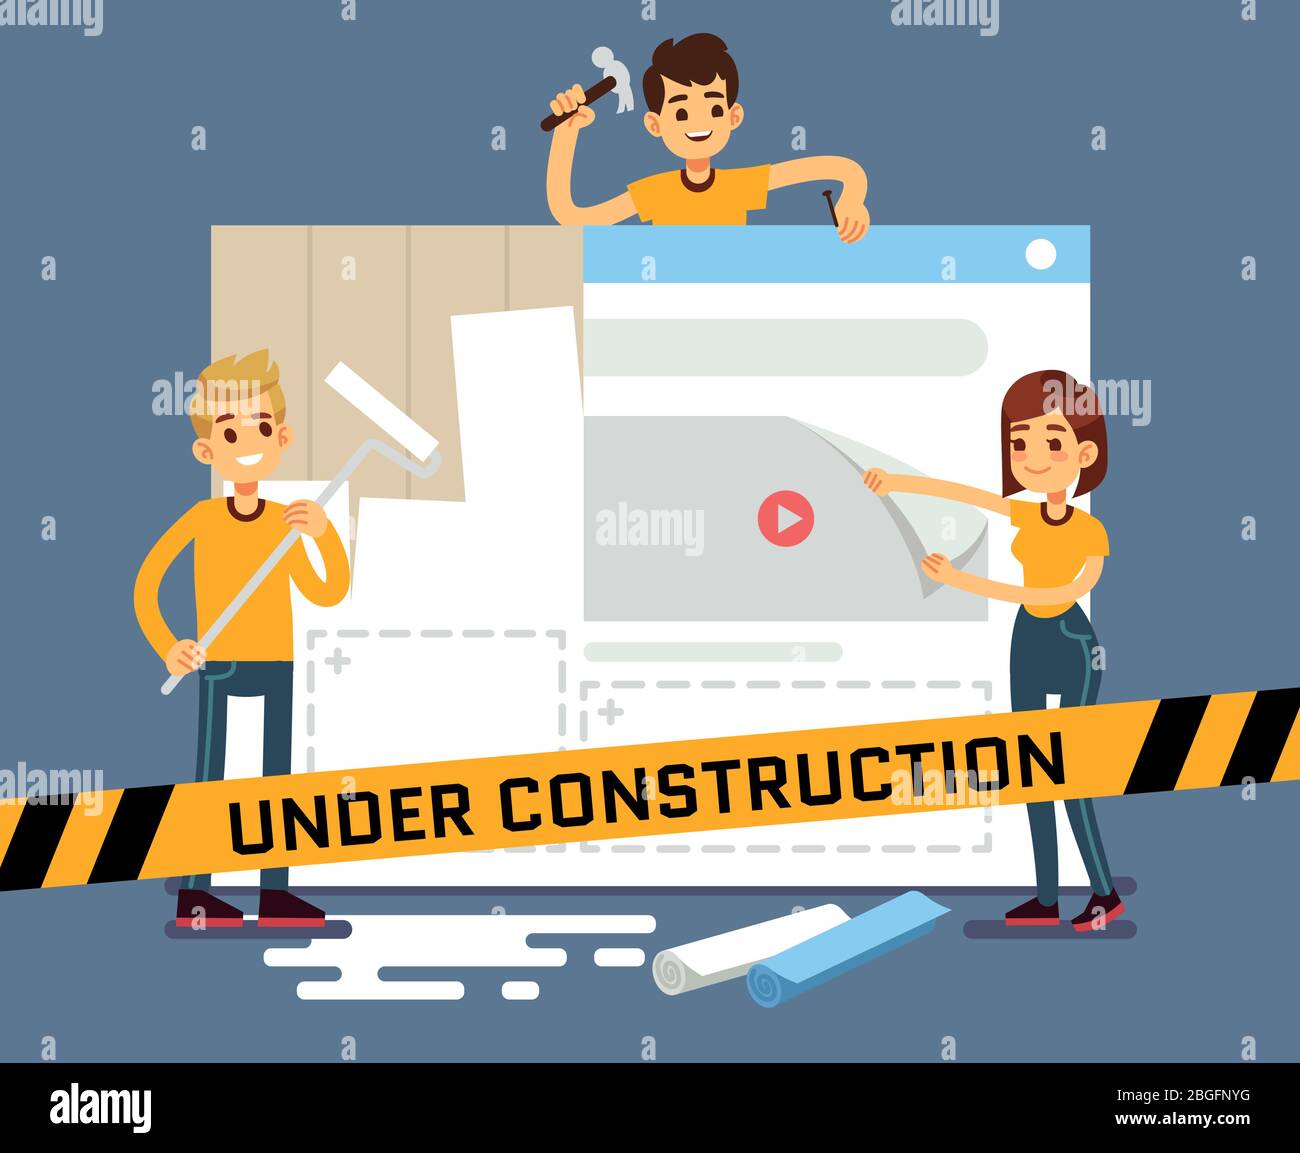 Website under construction vector cartoon concept with web designers. Web site under construction page, illustration of internet construct and development Stock Vector